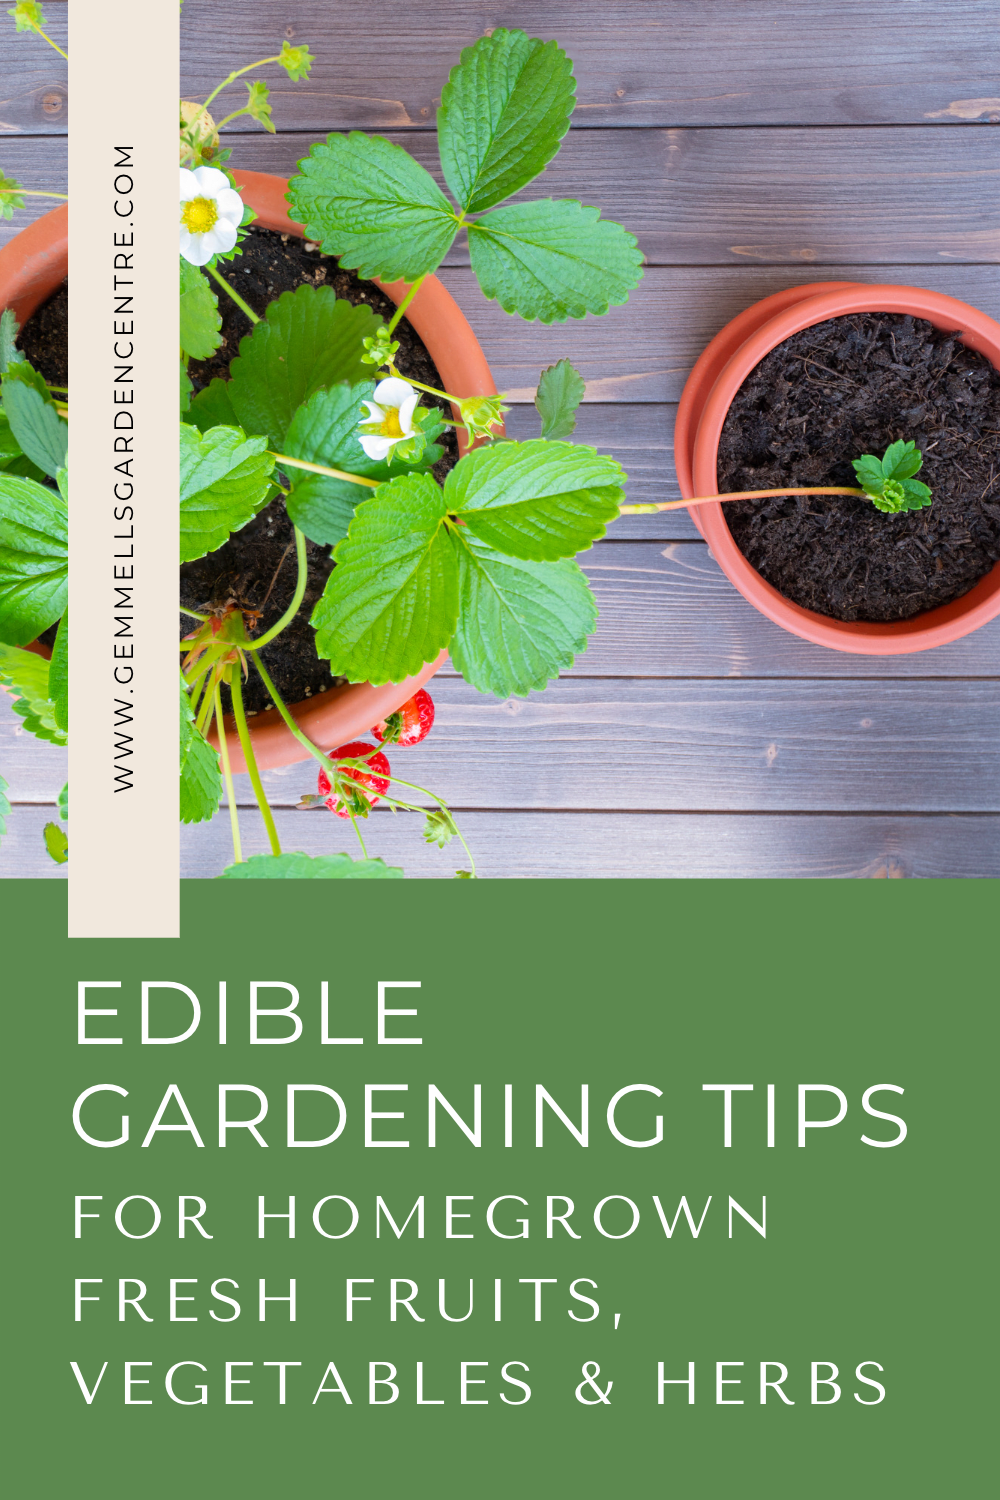 Edible Gardening Tips for Homegrown Fresh Fruits, Vegetables & Herbs